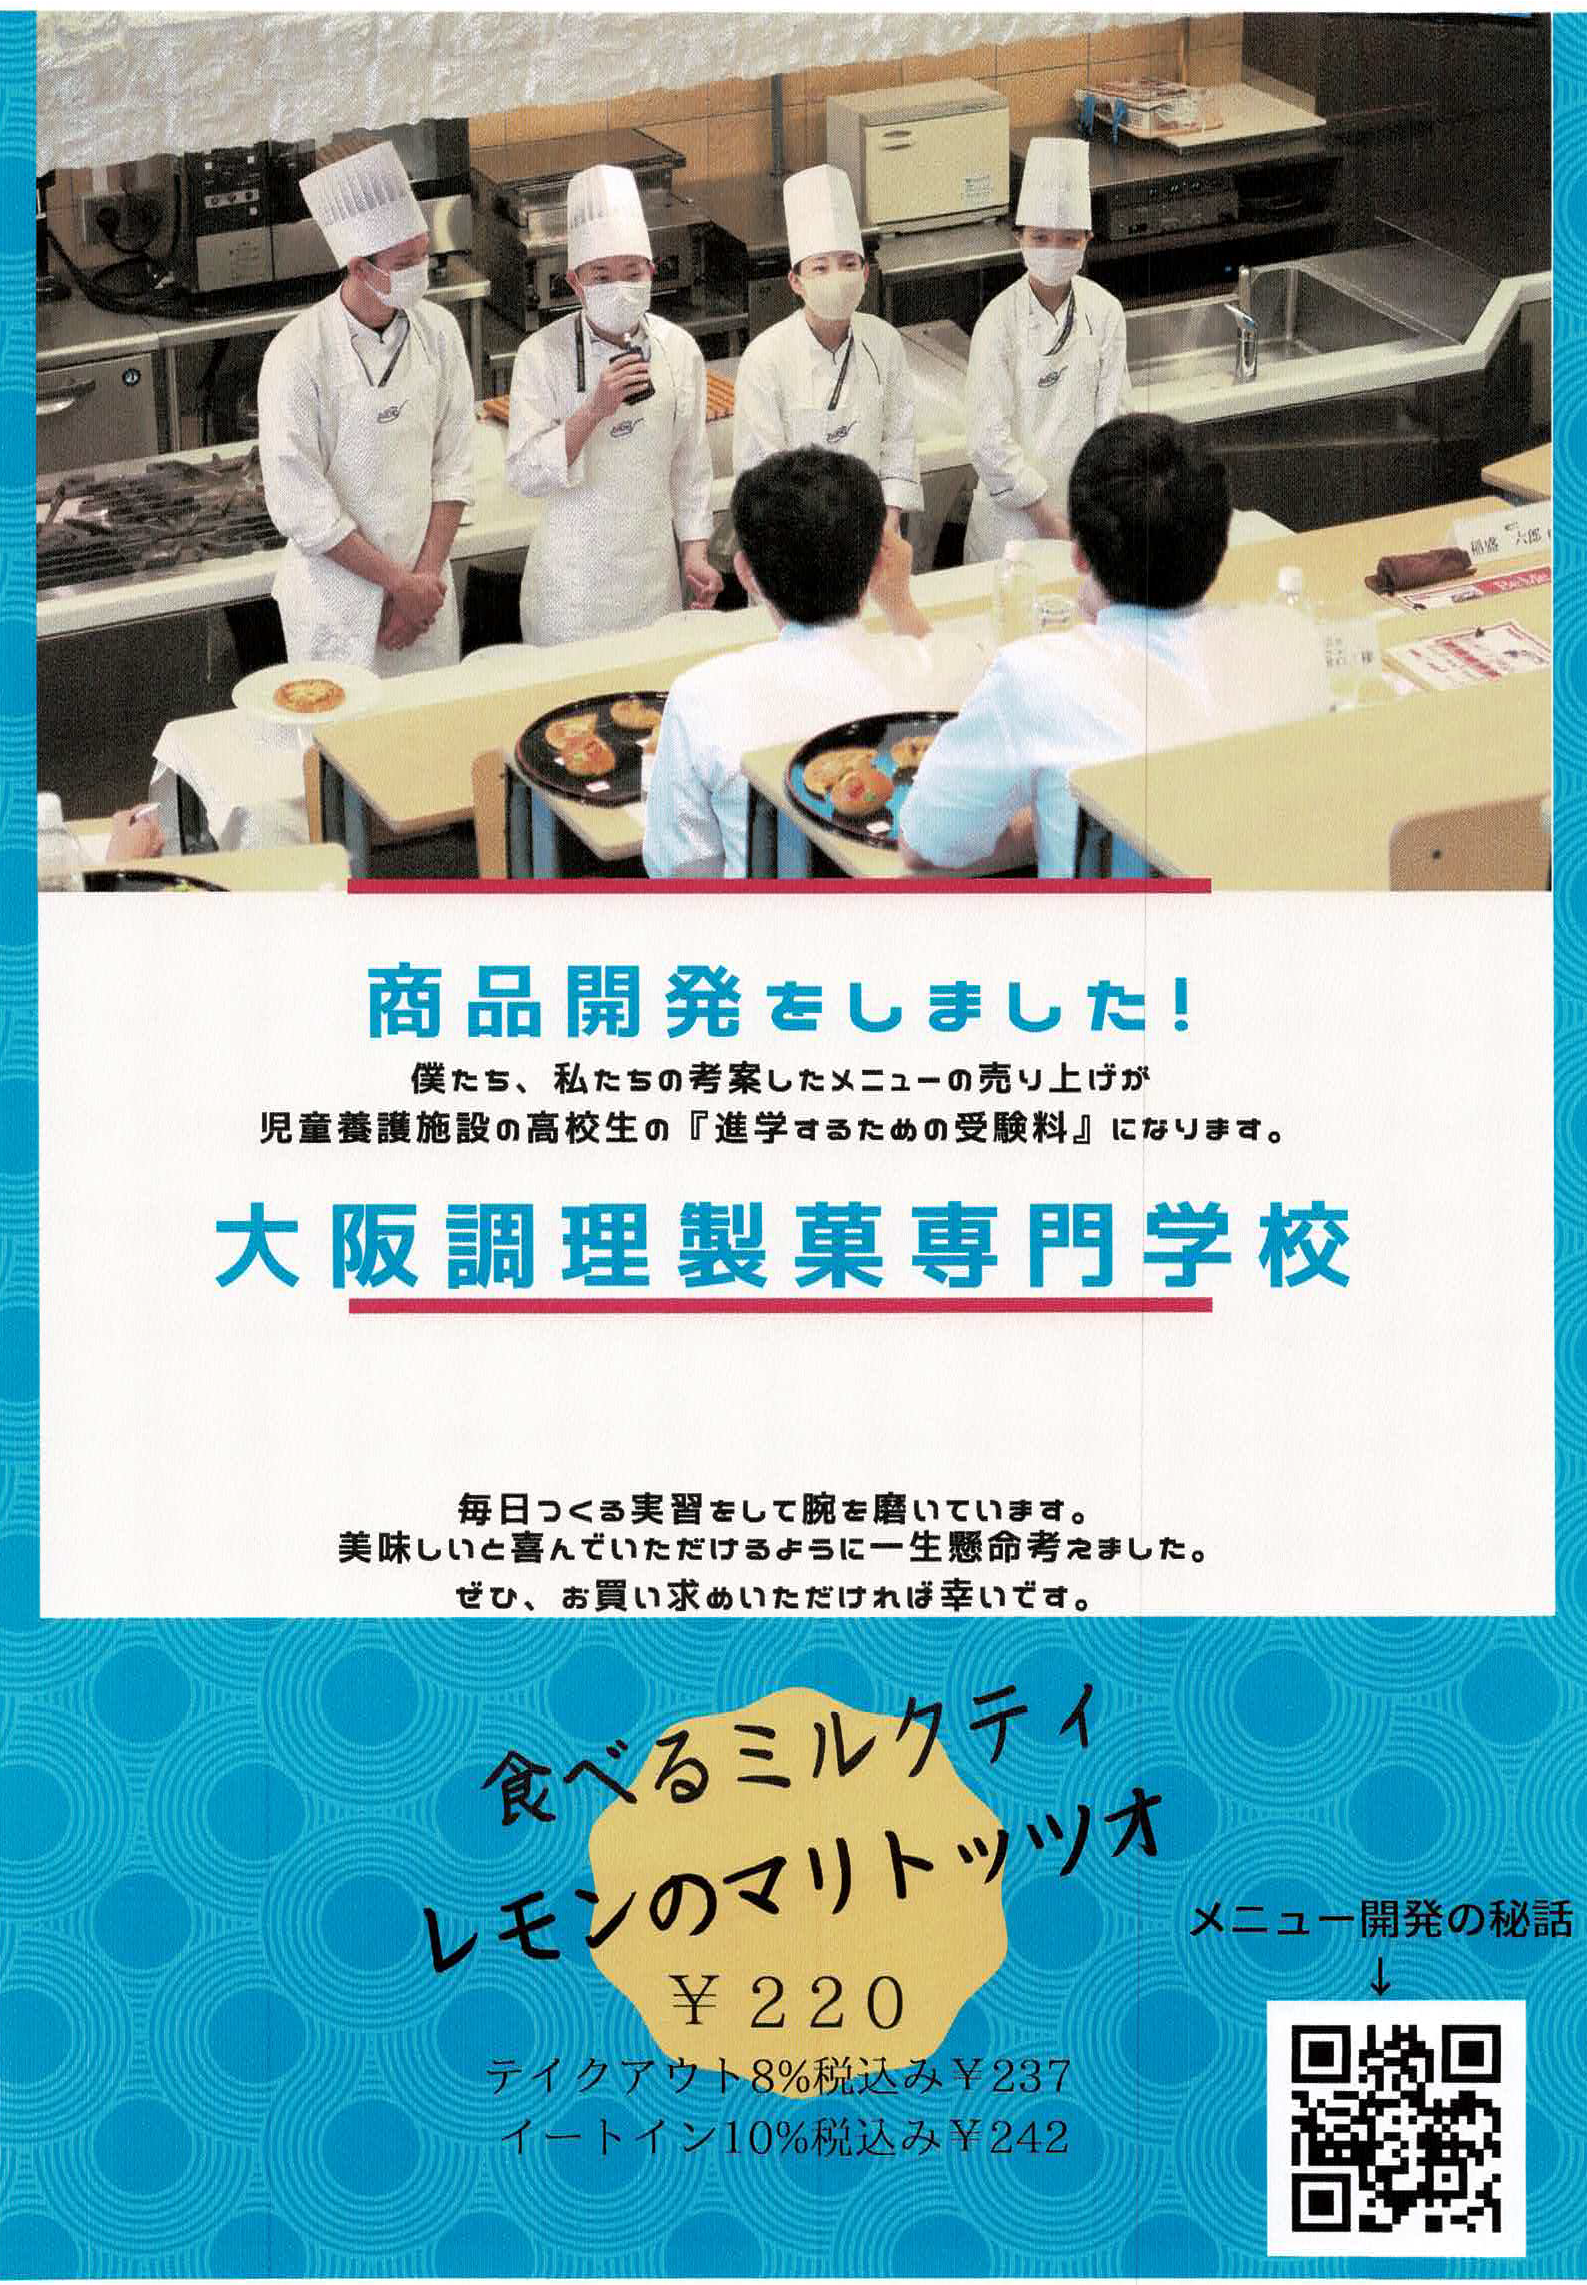 <span class="title">大阪調理製菓専門学校の学生さんと・・・・。</span>